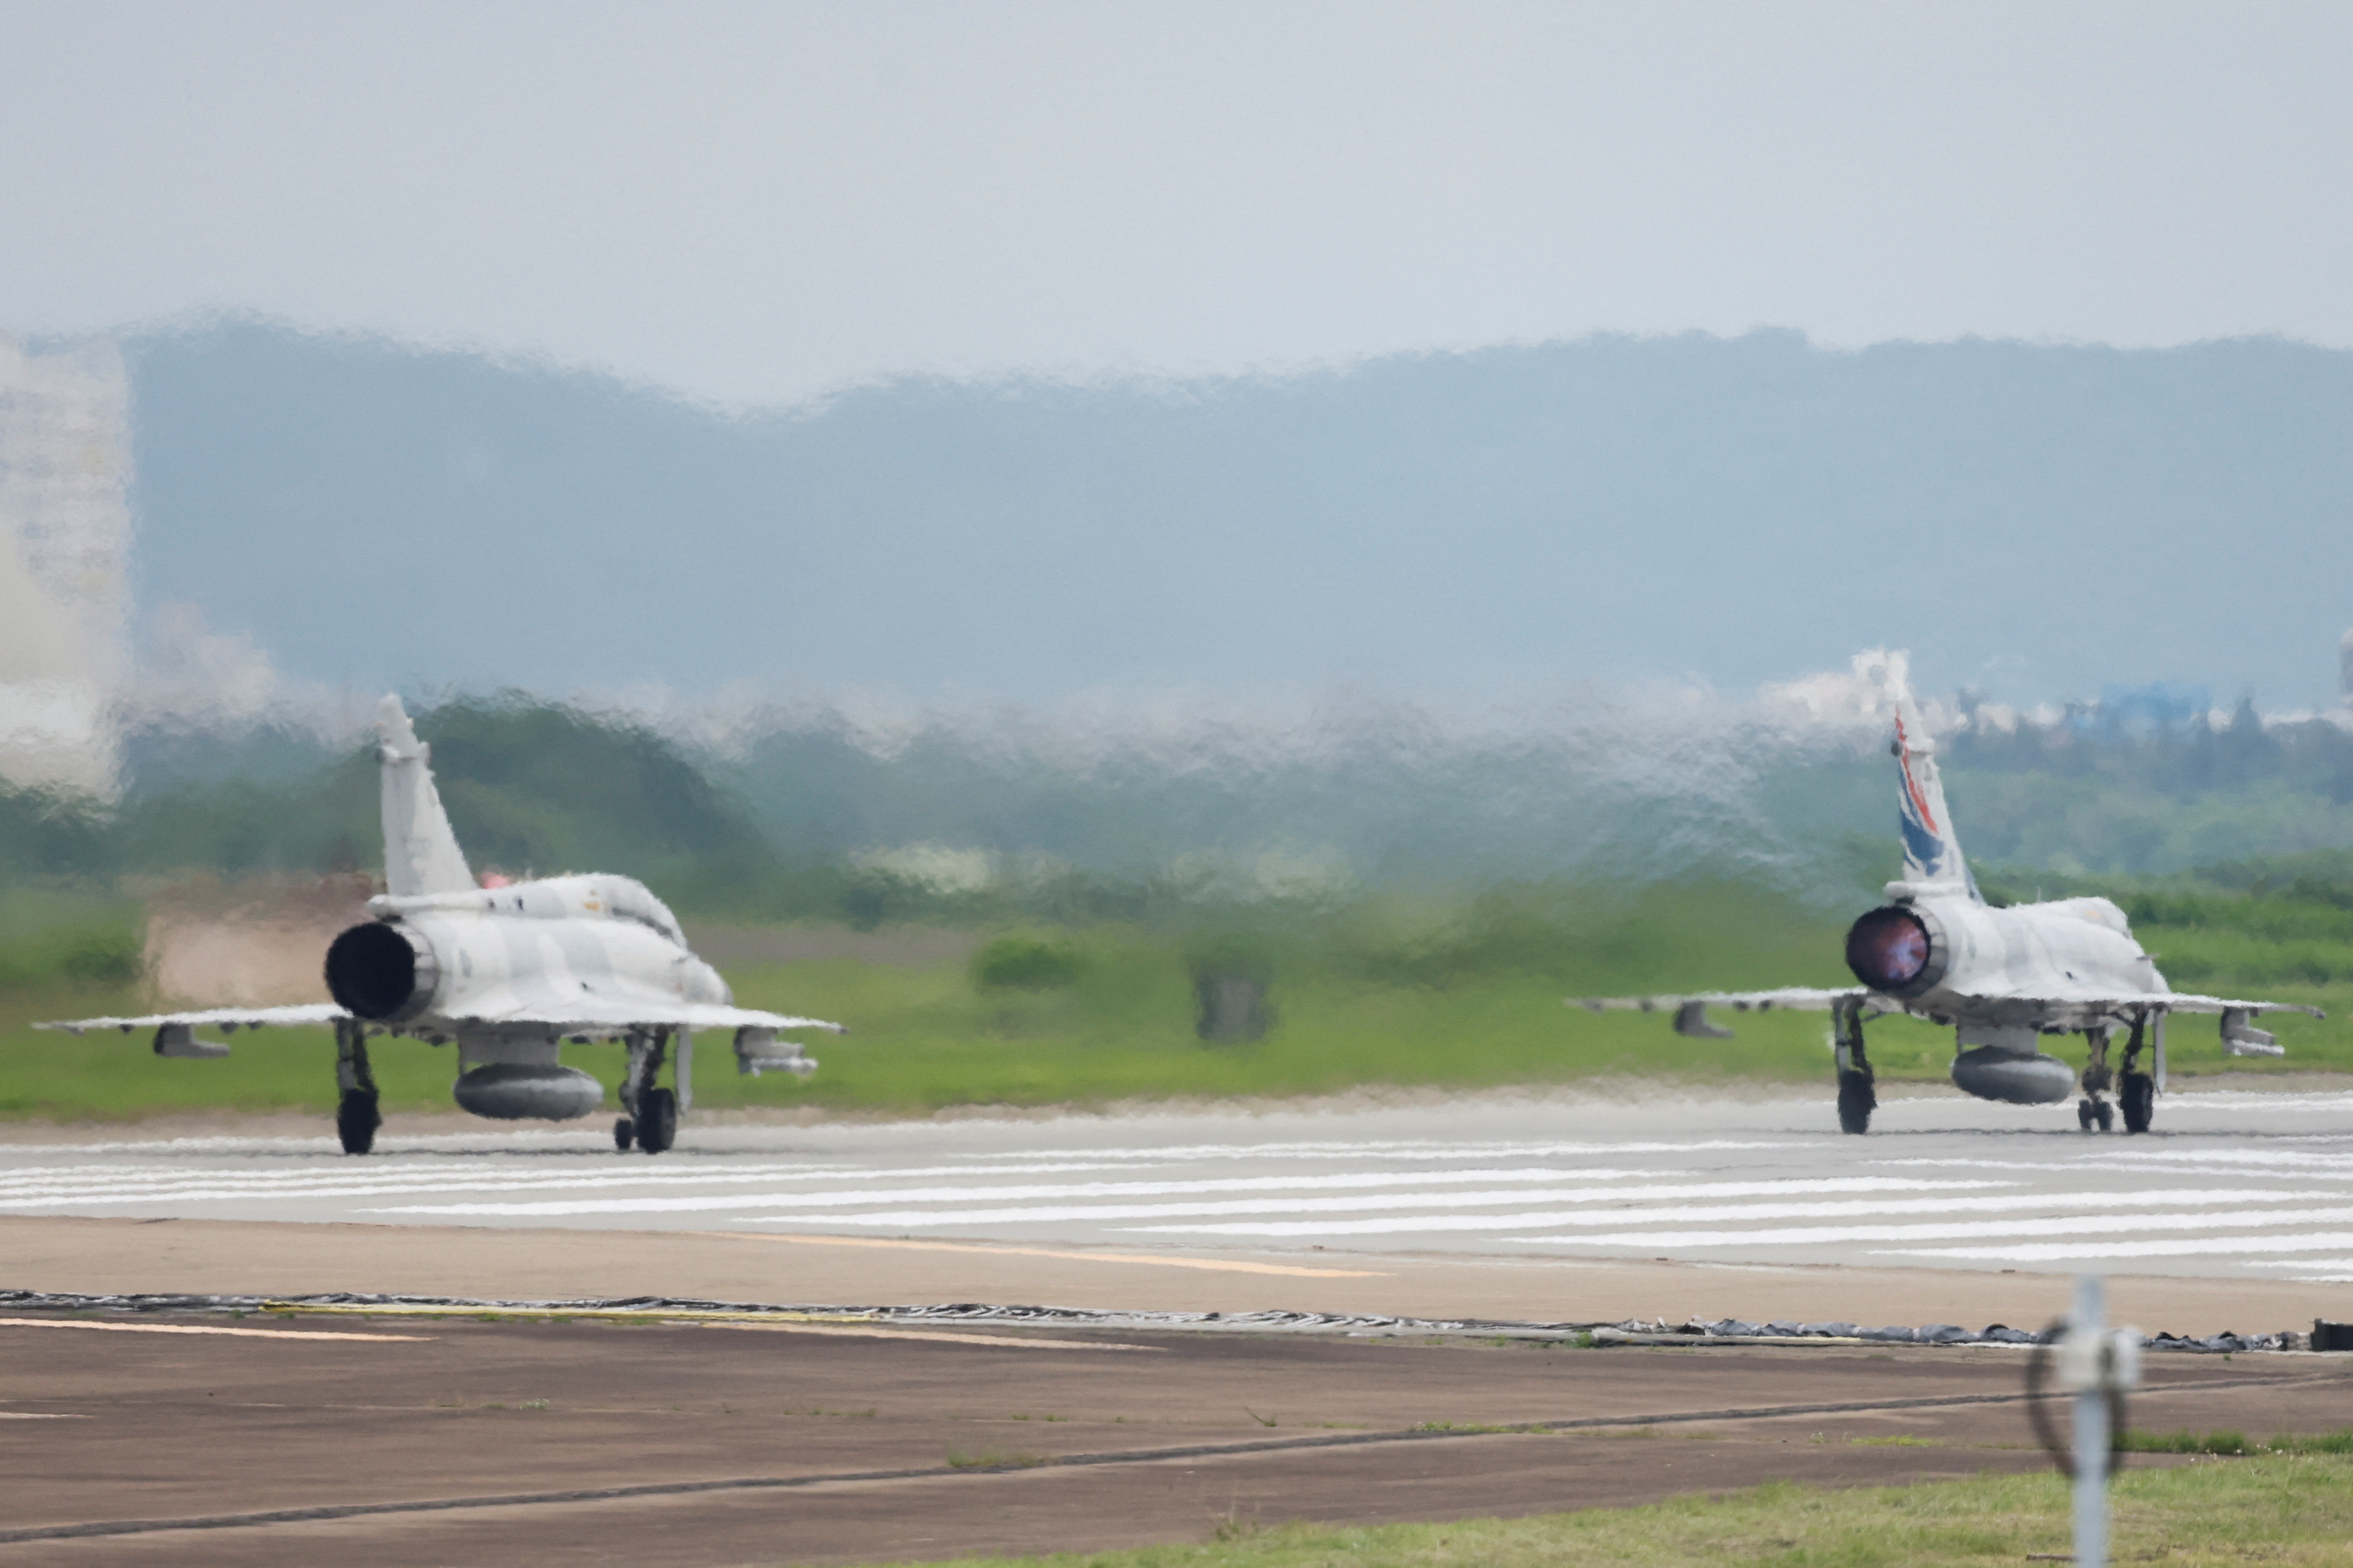 Taiwan Air Force Mirage 2000-5 aircraft prepare to take off at Hsinchu Air Base, in Hsinchu